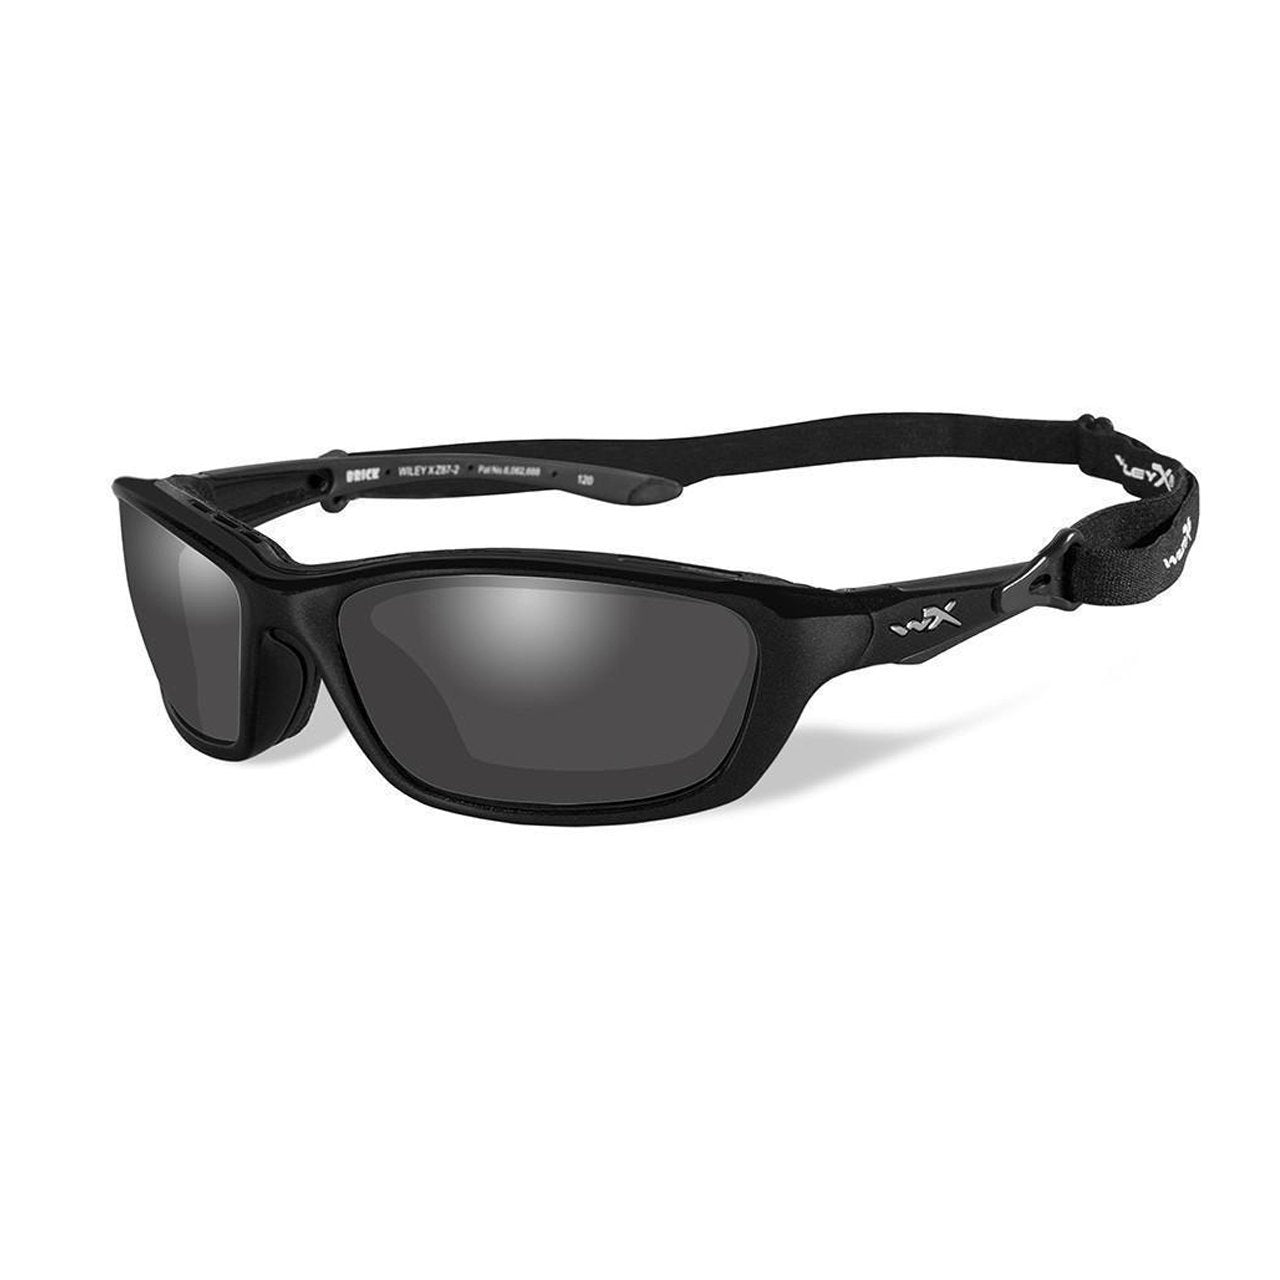 Wiley X Brick Sunglasses Smoke Grey Lens Matte Black Frame Tactical Distributors Ltd New Zealand